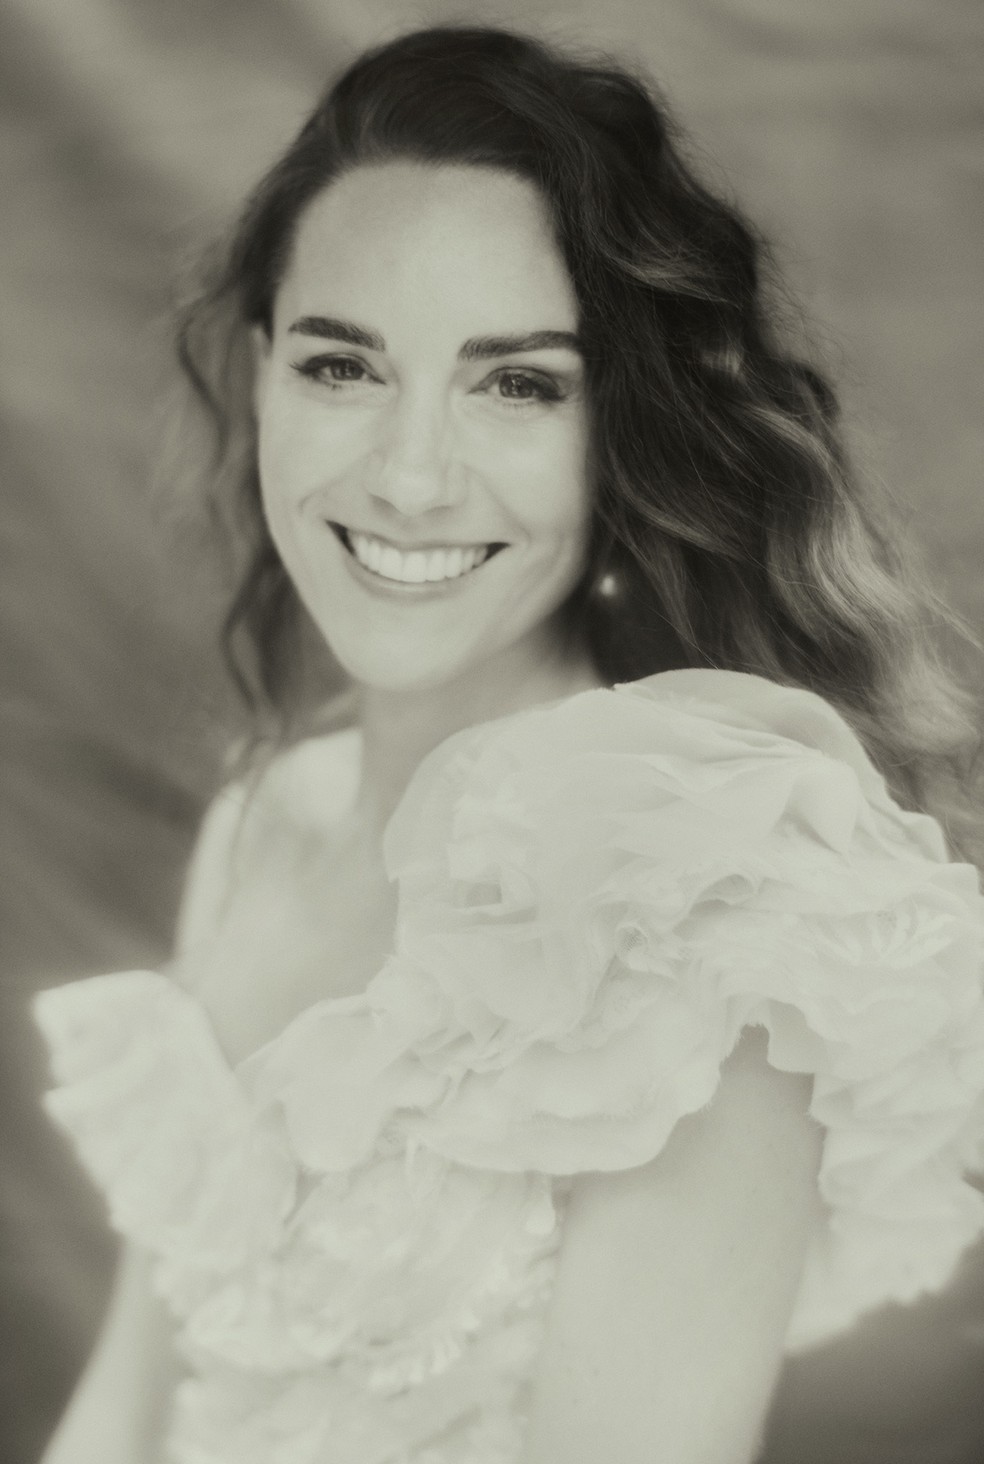 Imagem em preto e branco mostra Kate Middleton de vestido branco, sorrindo